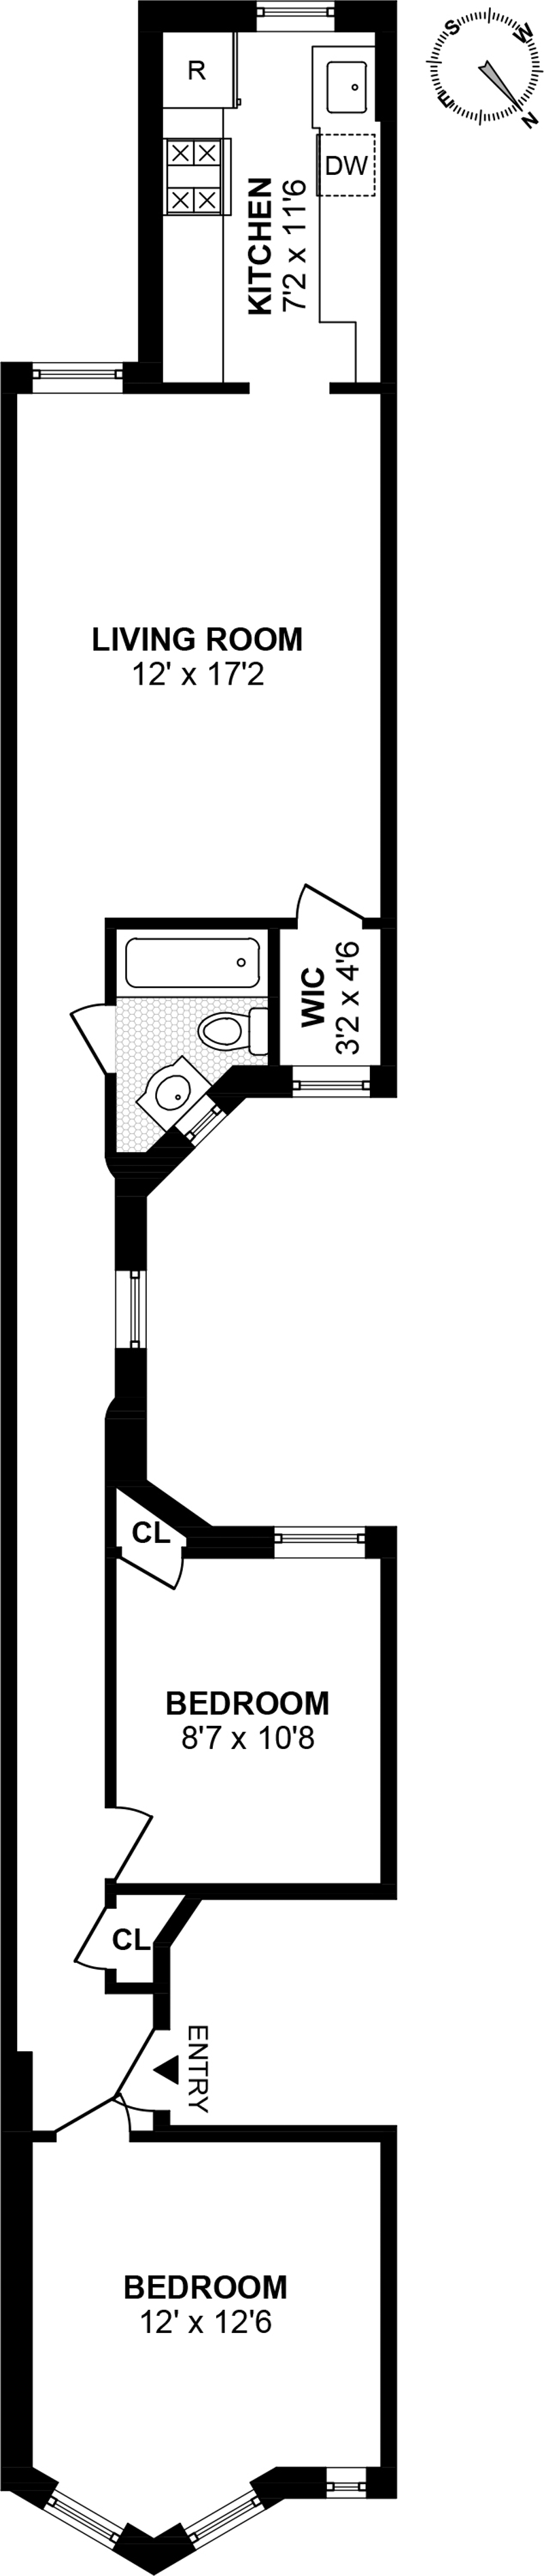 Floorplan for 528 5th Street, 4L